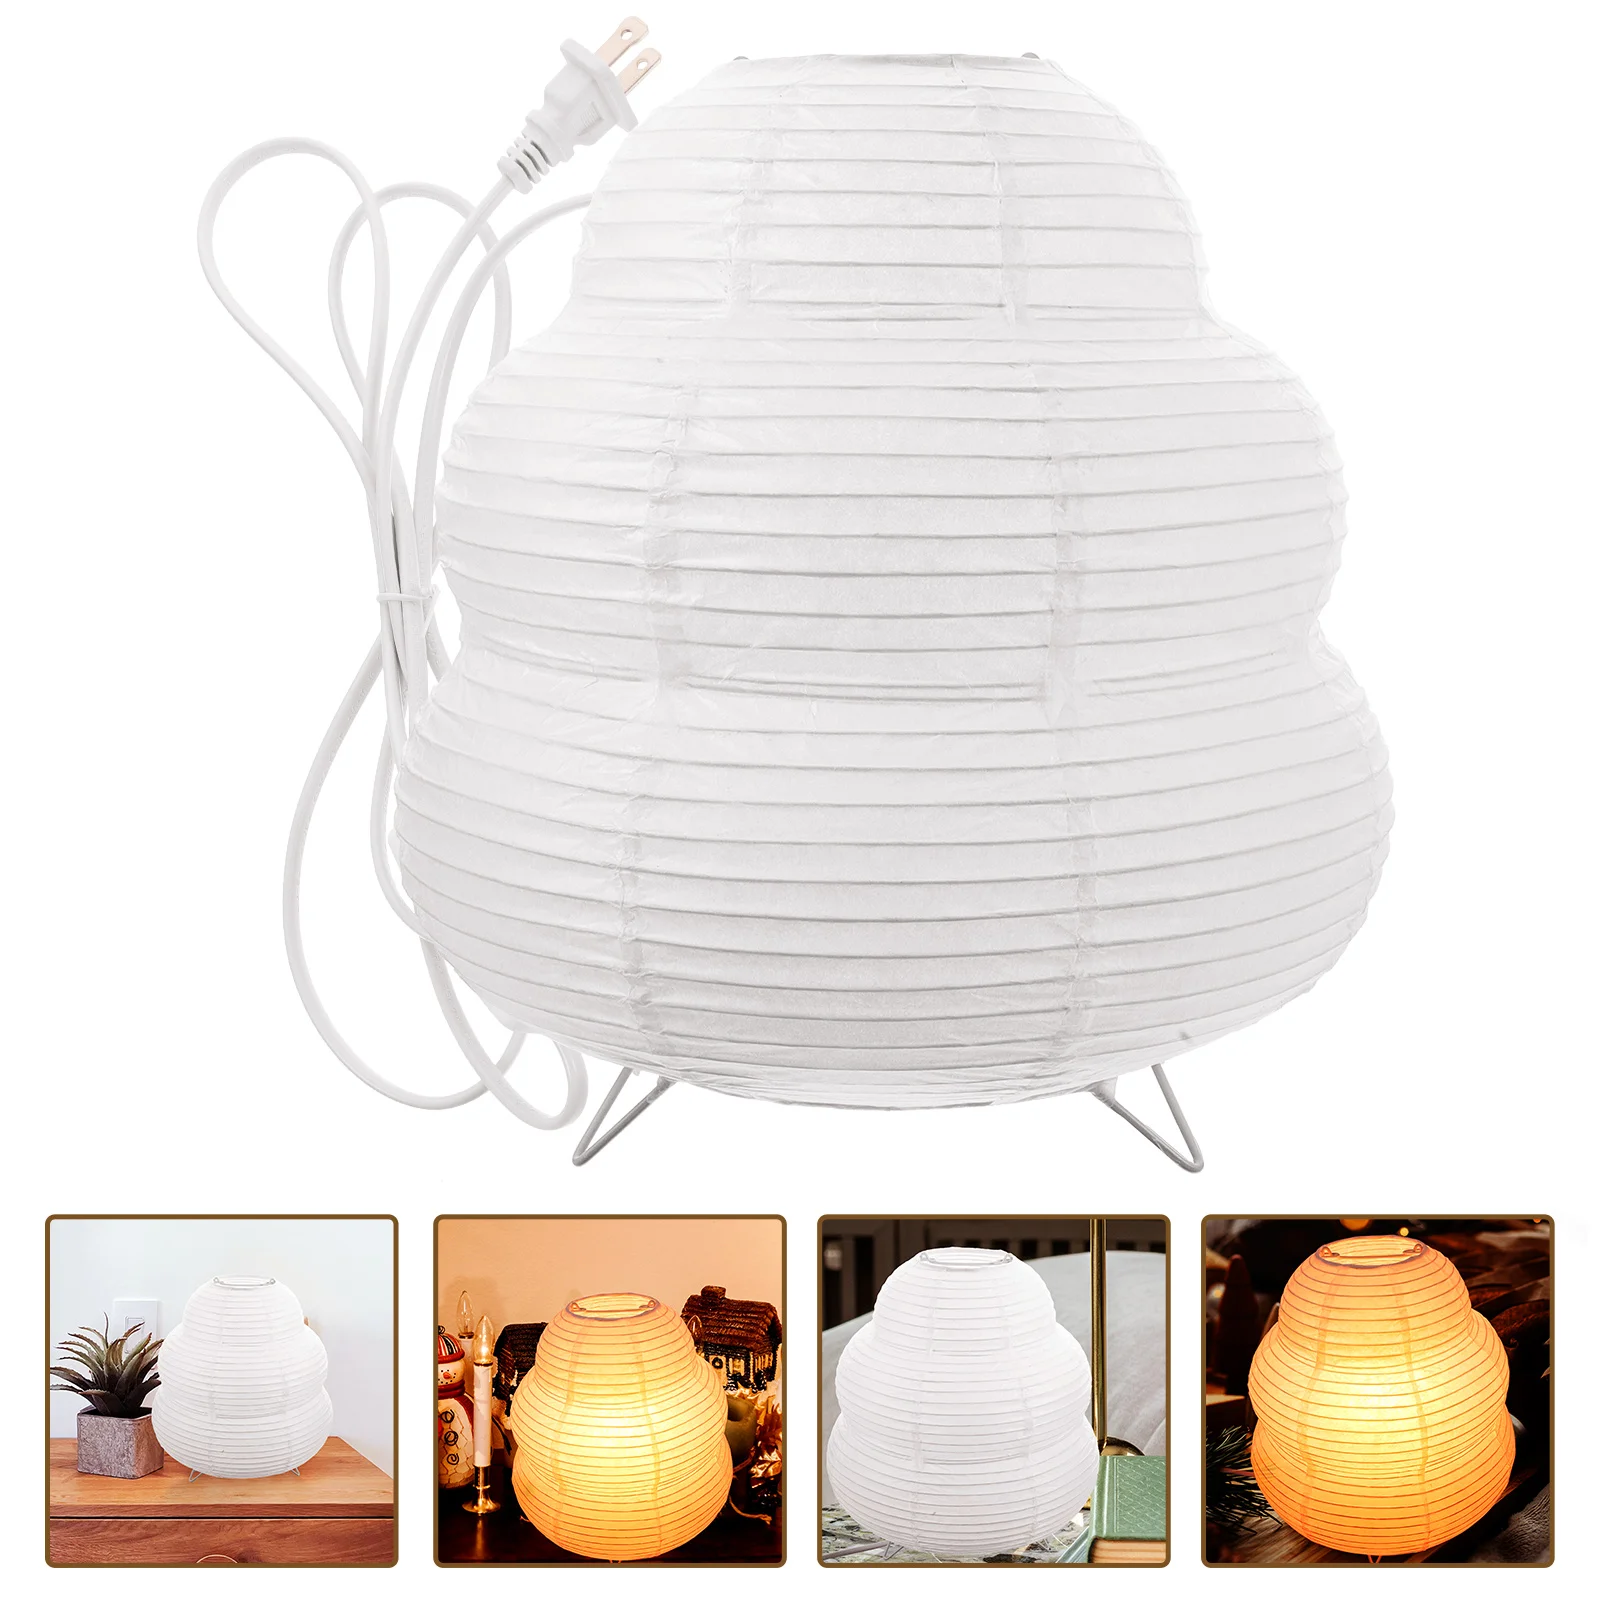 

Beaupretty Bedside Table Lamp White Rice Paper Lantern Desk Floor Night Light Bedroom Living Room Office Plug